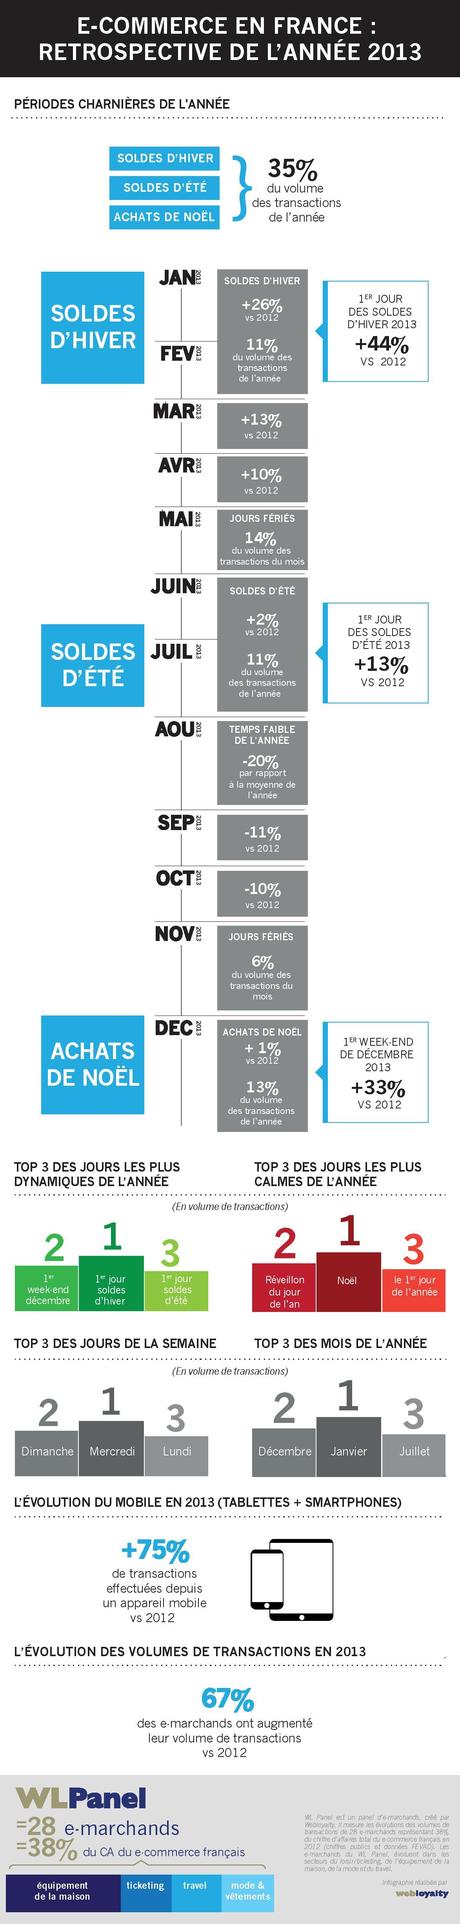 infographie wlpanel bilan ecommerce 2013